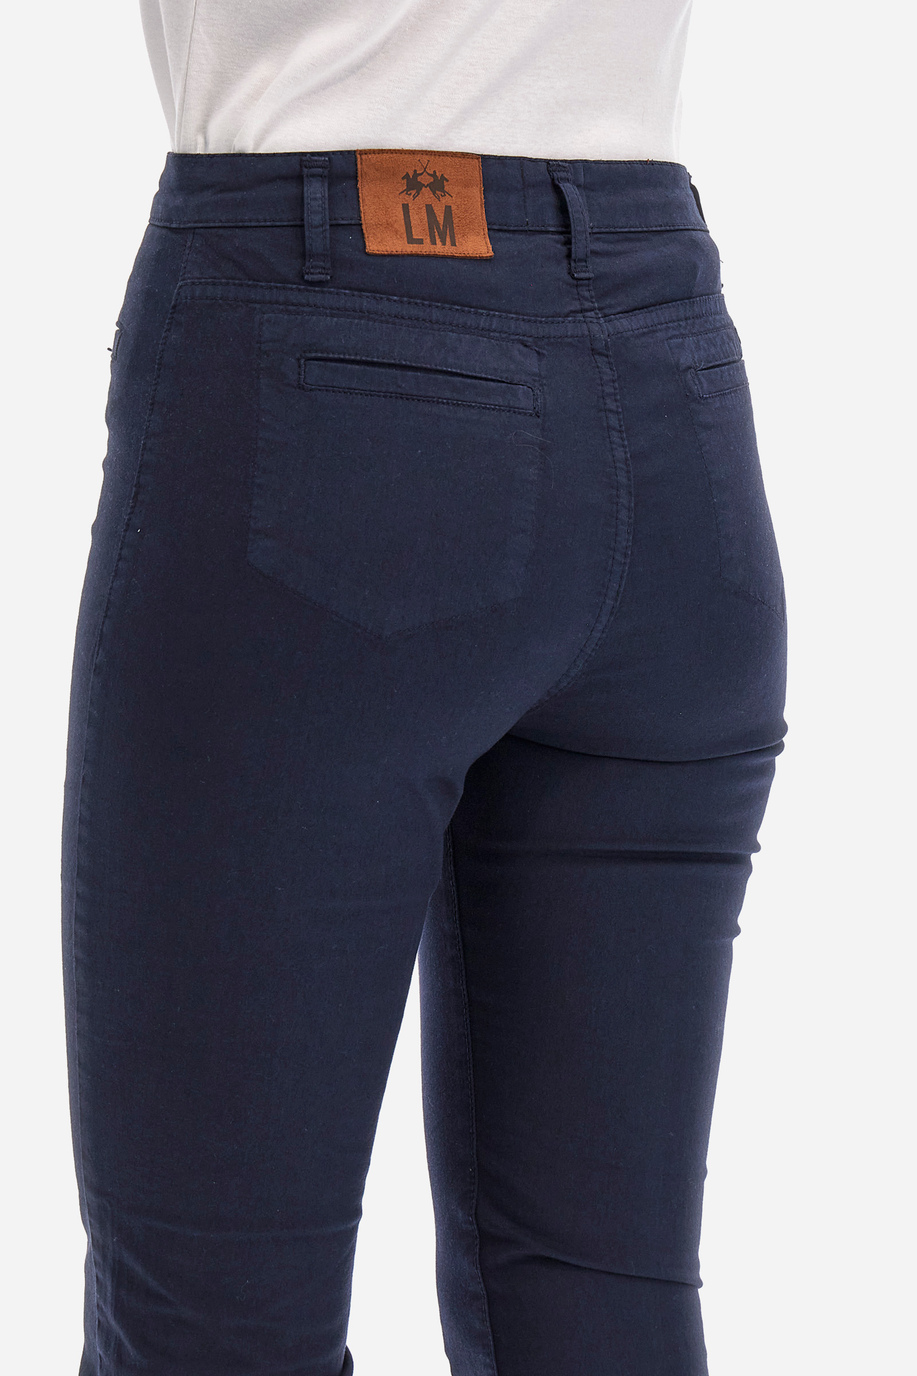 Pantalone a sigaretta regular fit in cotone elasticizzato - Yessika - Pantaloni | La Martina - Official Online Shop